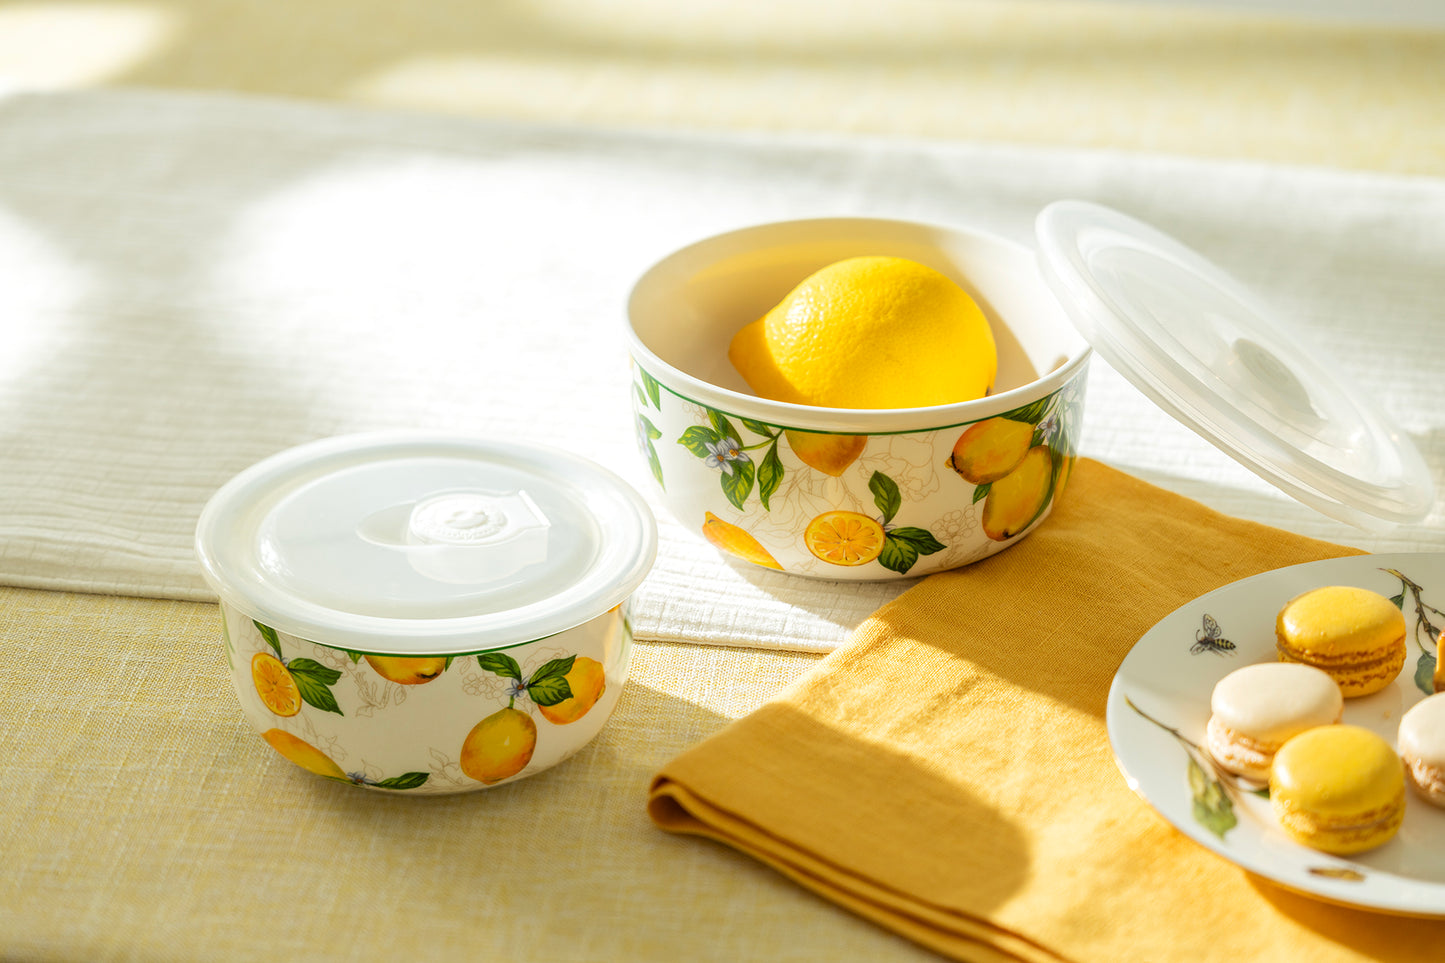 Lemon Garden Storage Bowls with Vented Lids Set of 2